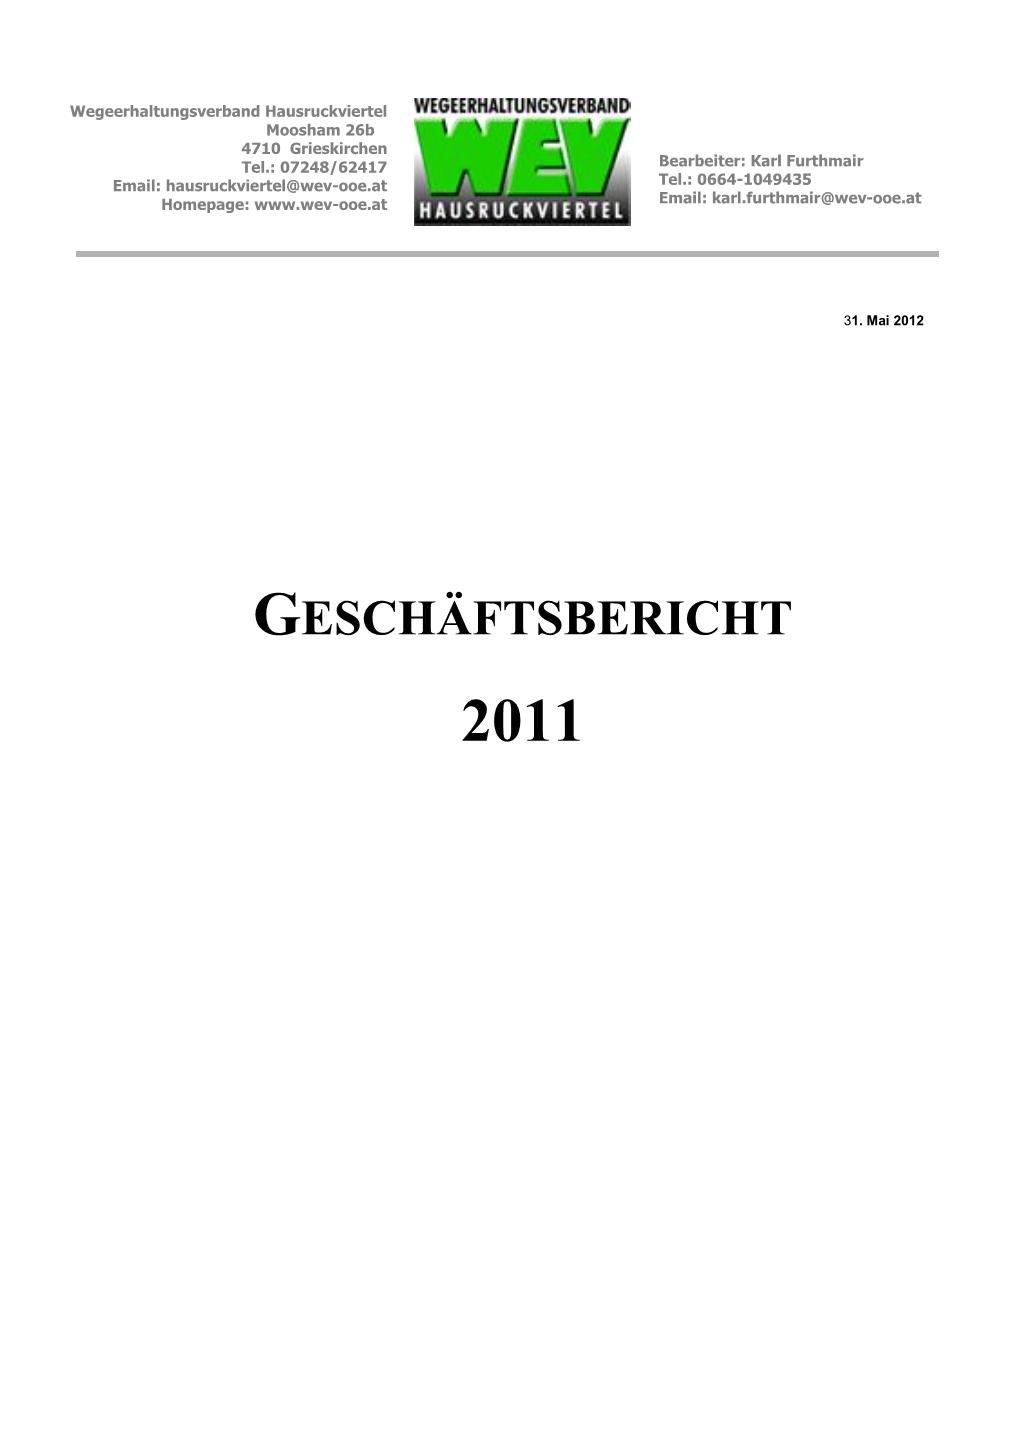 Geschäftsbericht 2011 Wev – Hausruckviertel Geschäftsbericht 2011